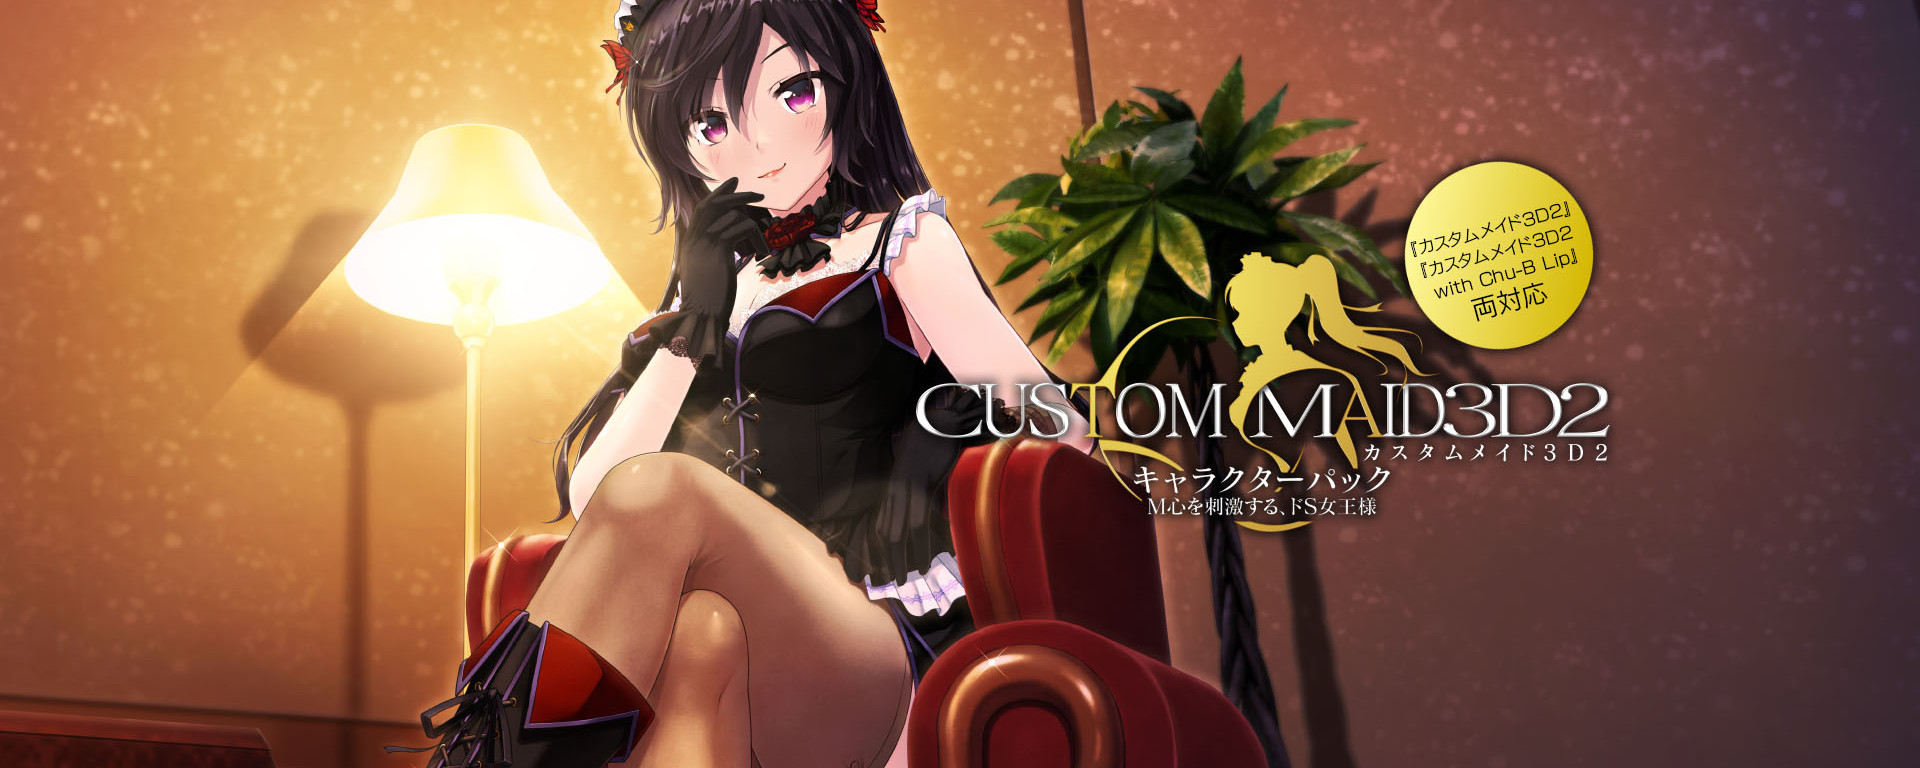 custom maid 3d 2 update